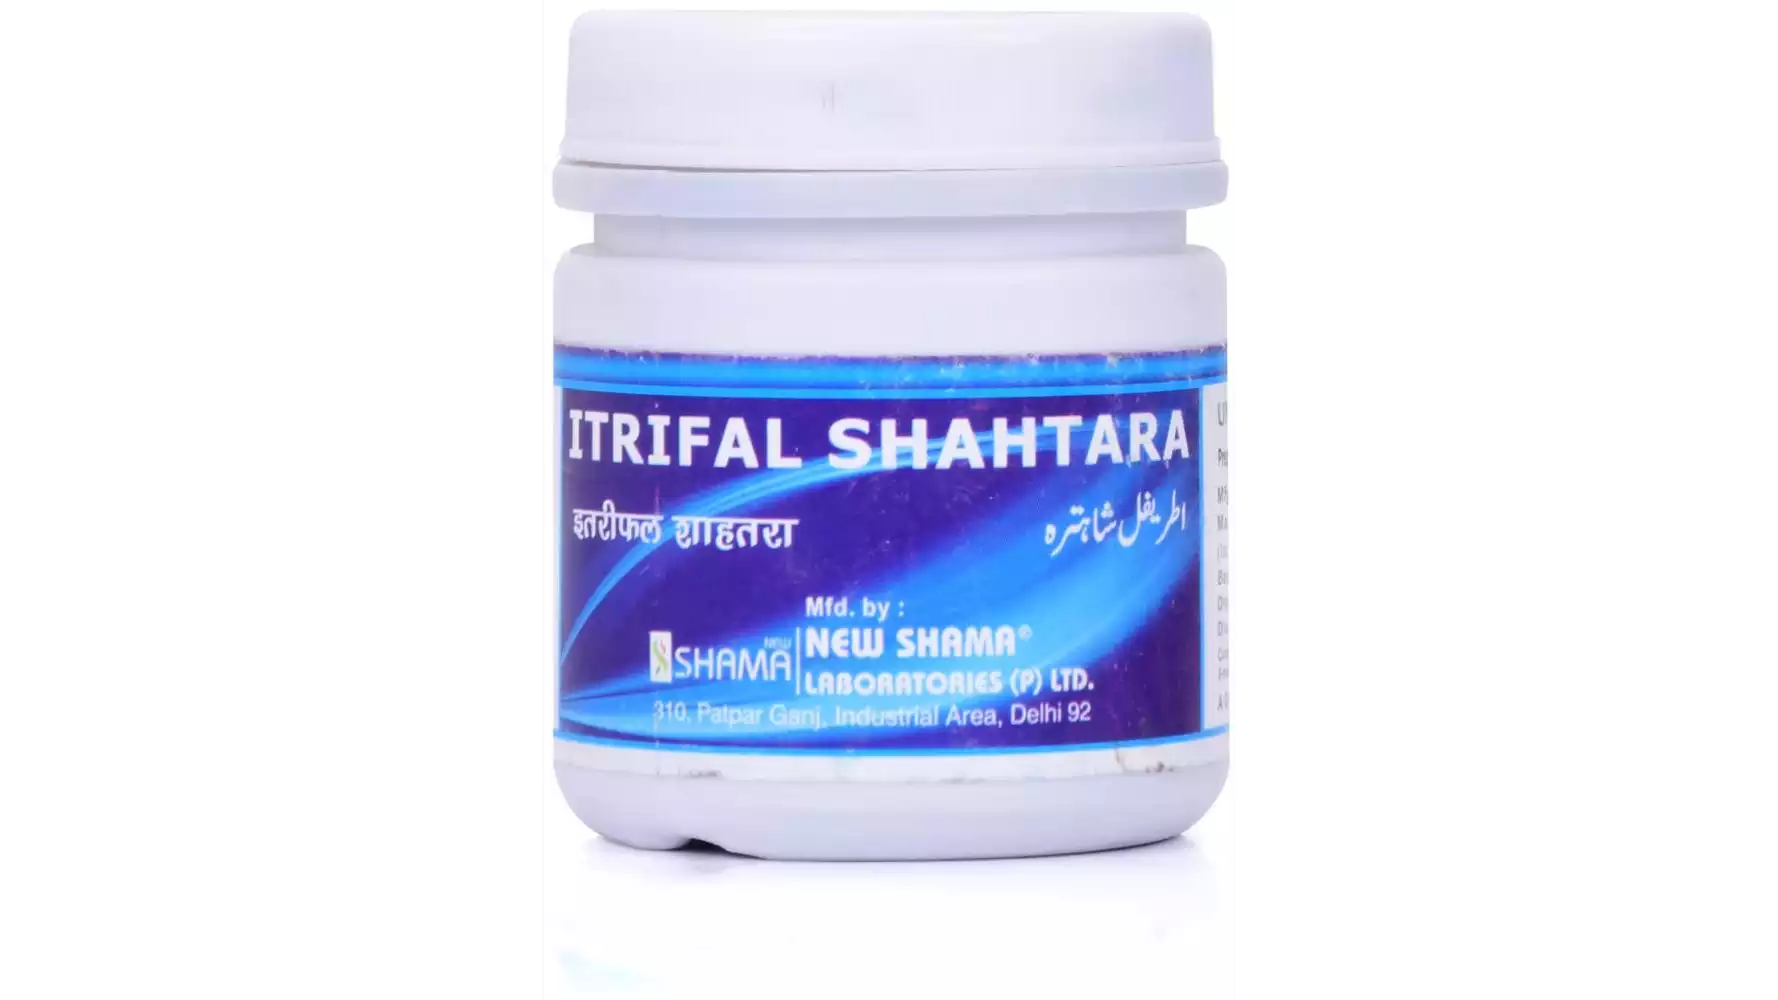 New Shama Itrifal Shahtara (250g)